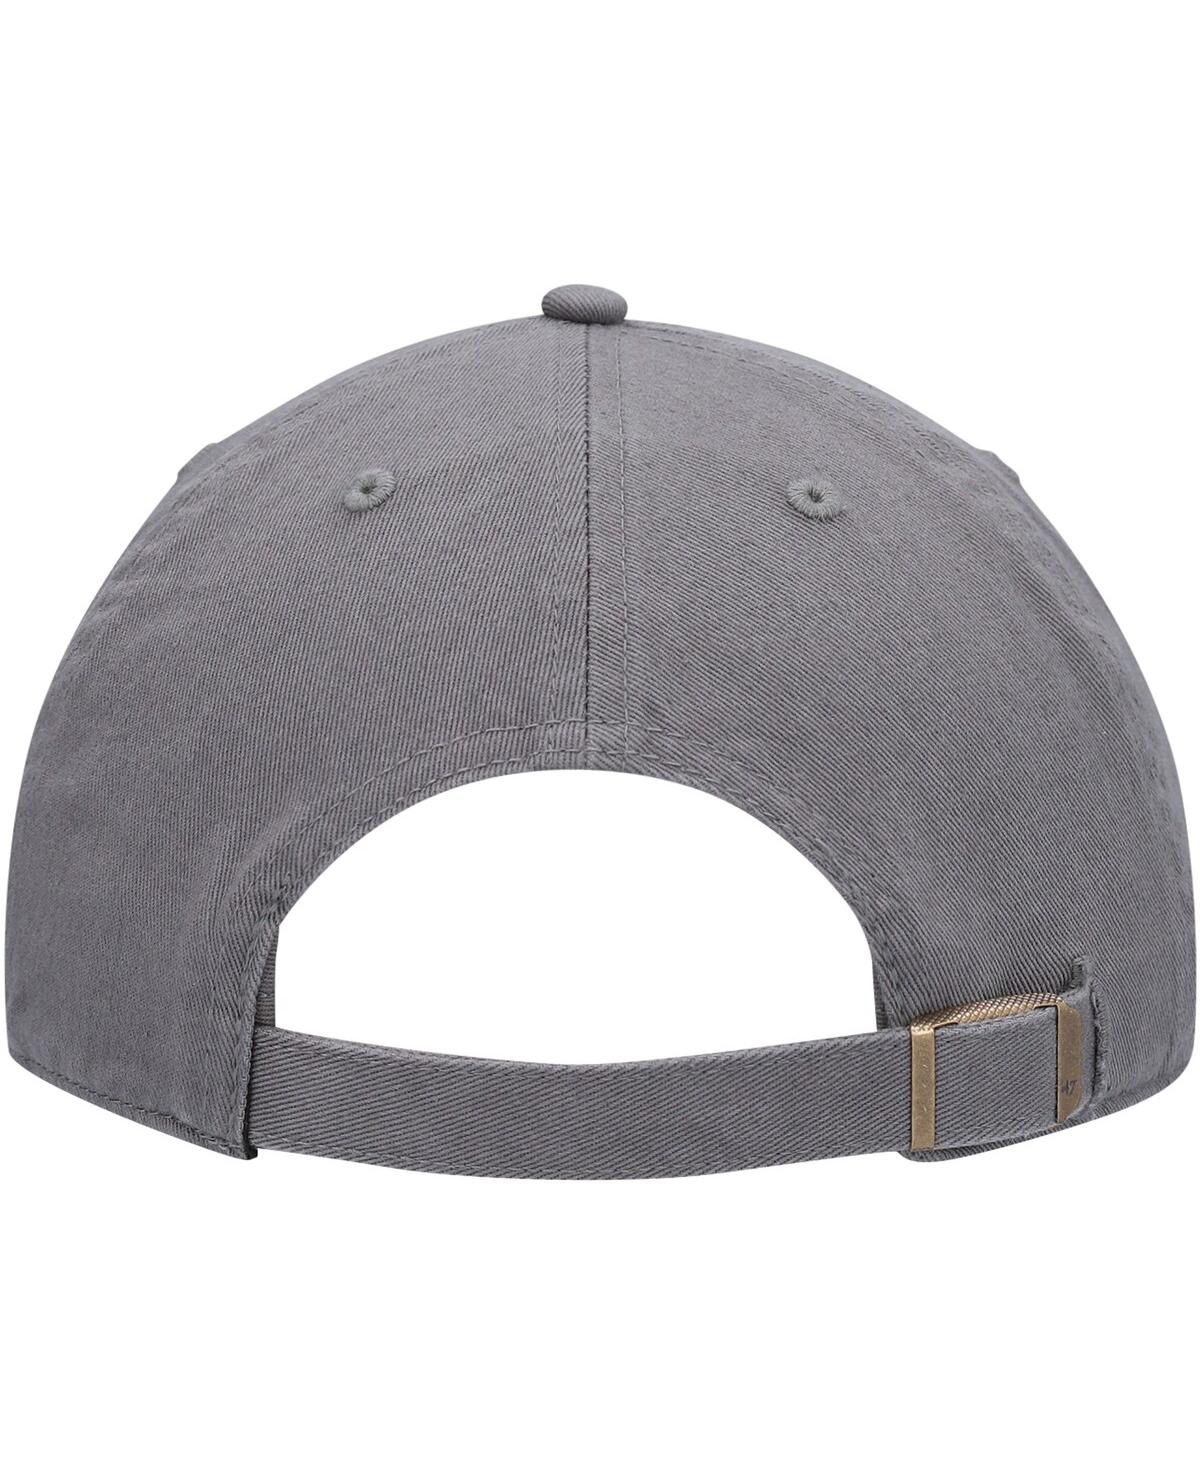 Shop 47 Brand Men's '47 Gray Clean Up Adjustable Hat